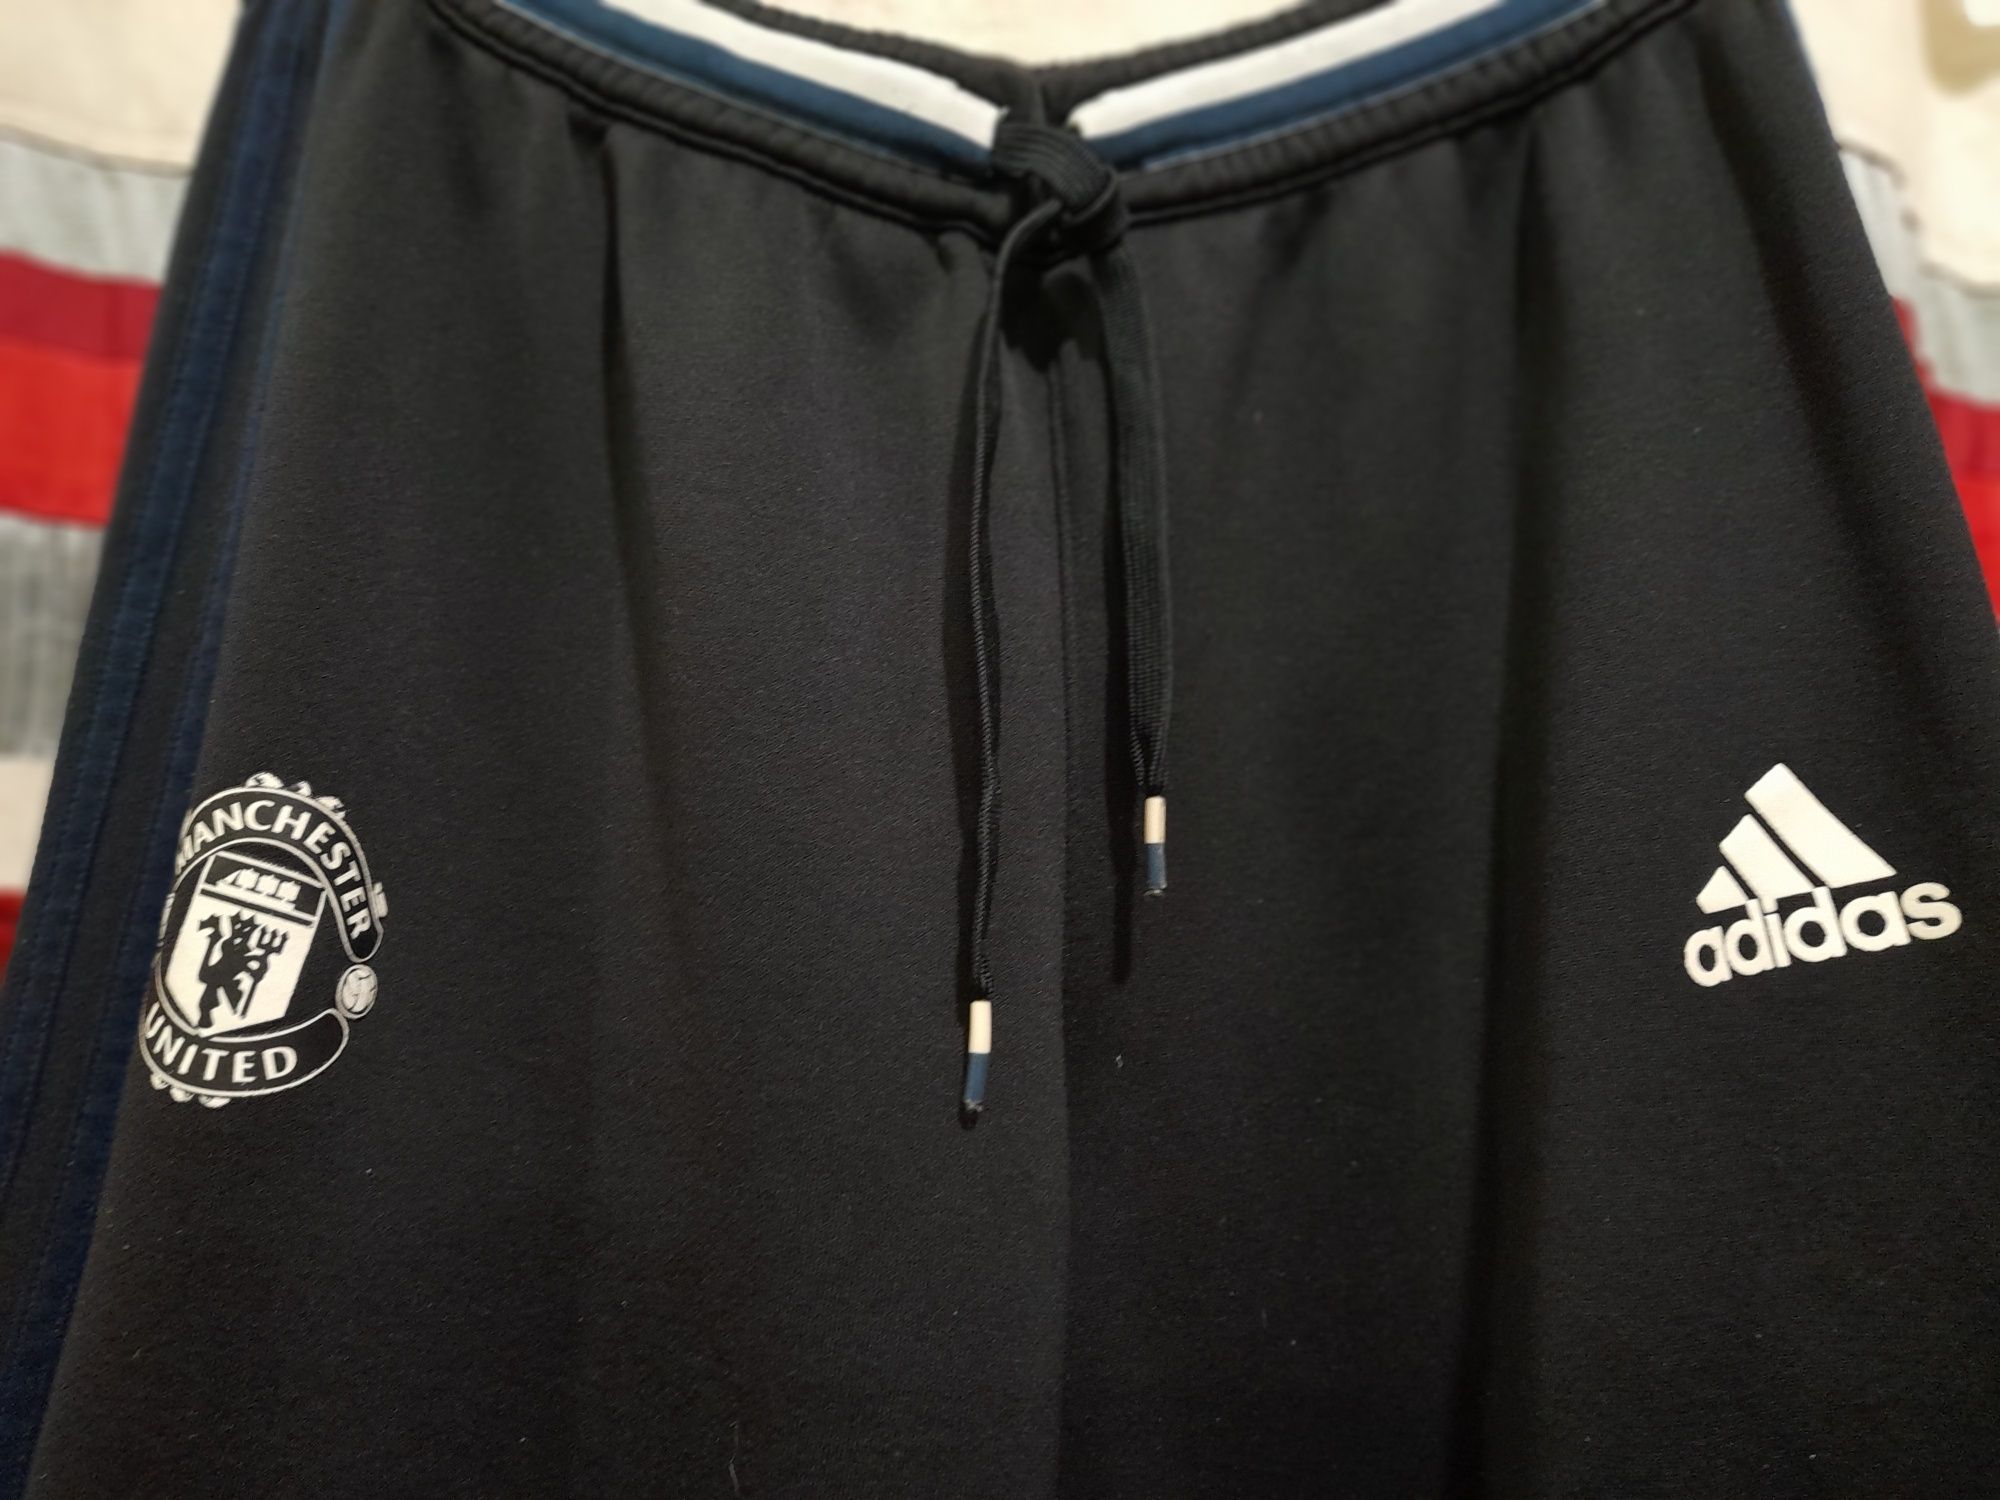 Adidas"Manchester United" спортивные штаны,  S